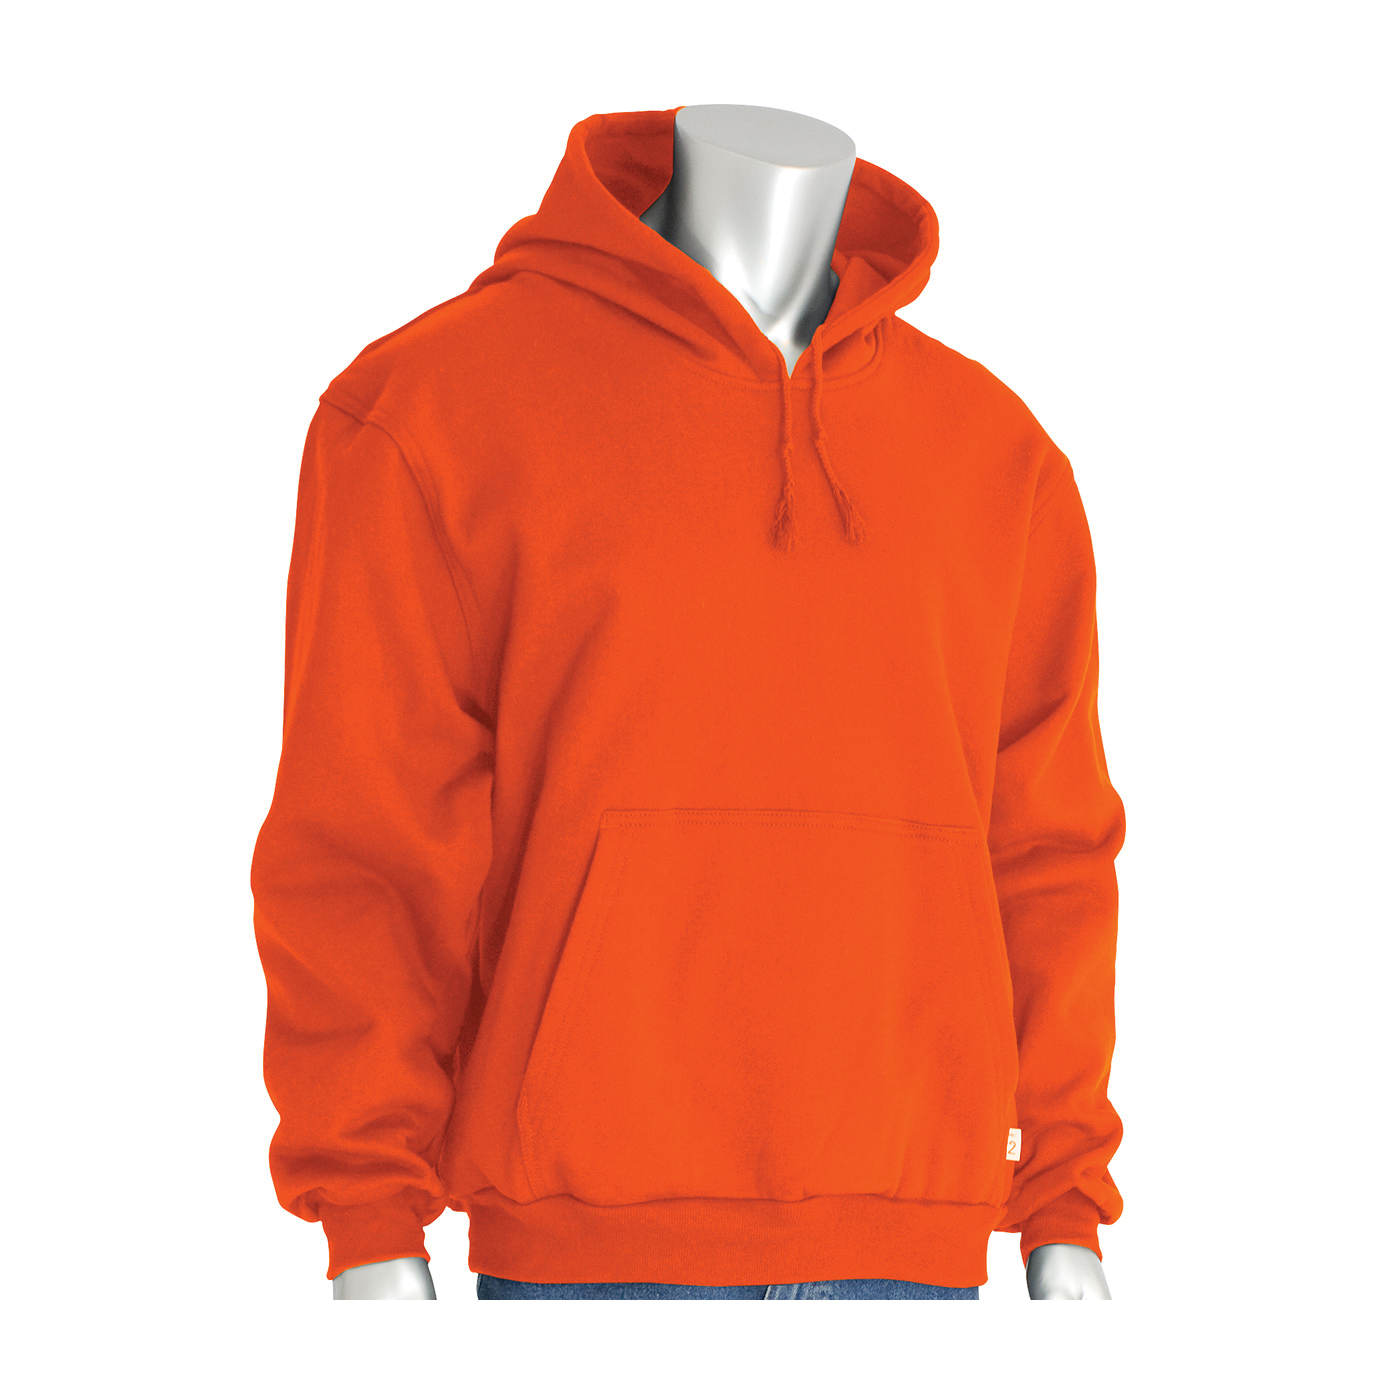 PIP® 385-FRPH-OR/M Polartec® 385-FRPH Arc and Flame Resistant Sweatshirt, M, Orange, FR Fleece Knit/100% Cotton, 30 in Regular, 31 in Tall L